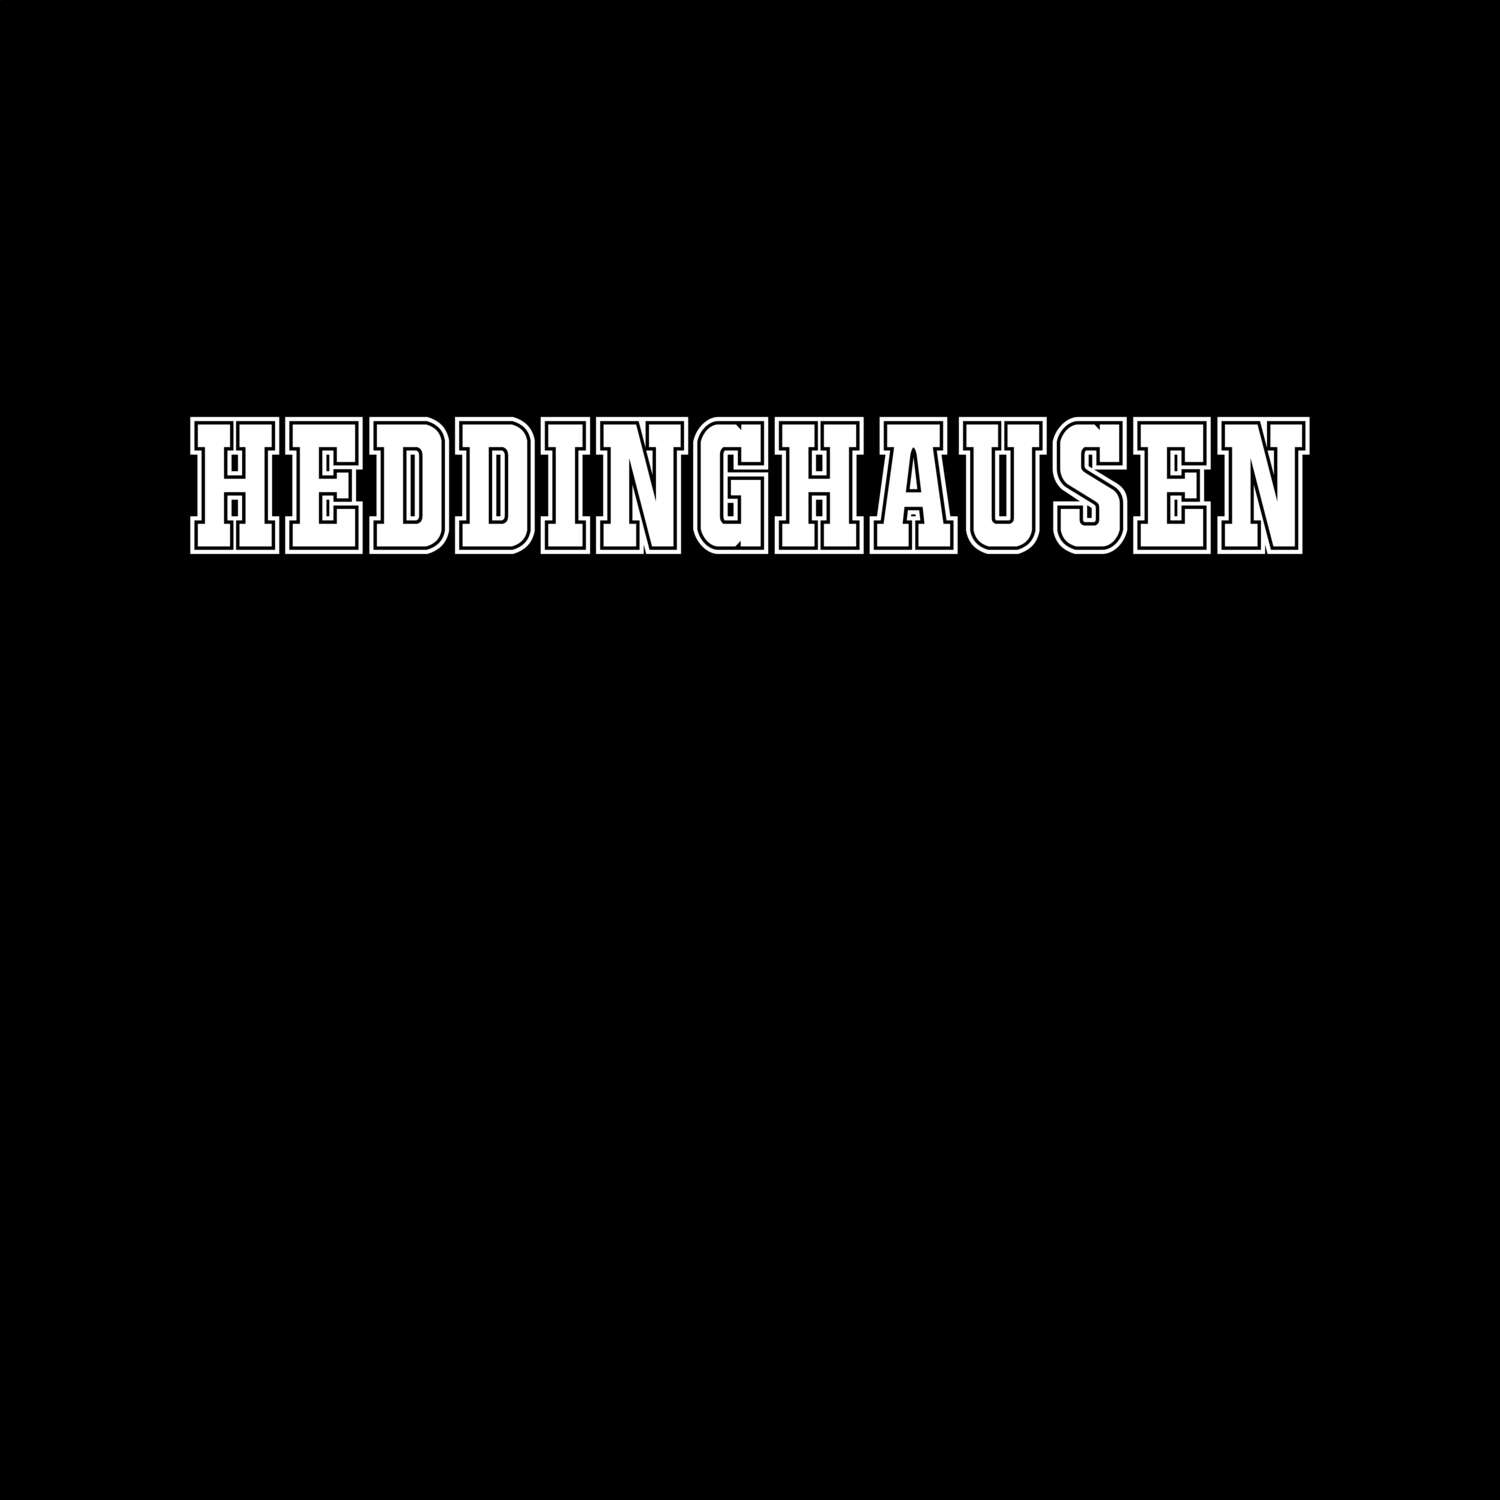 Heddinghausen T-Shirt »Classic«